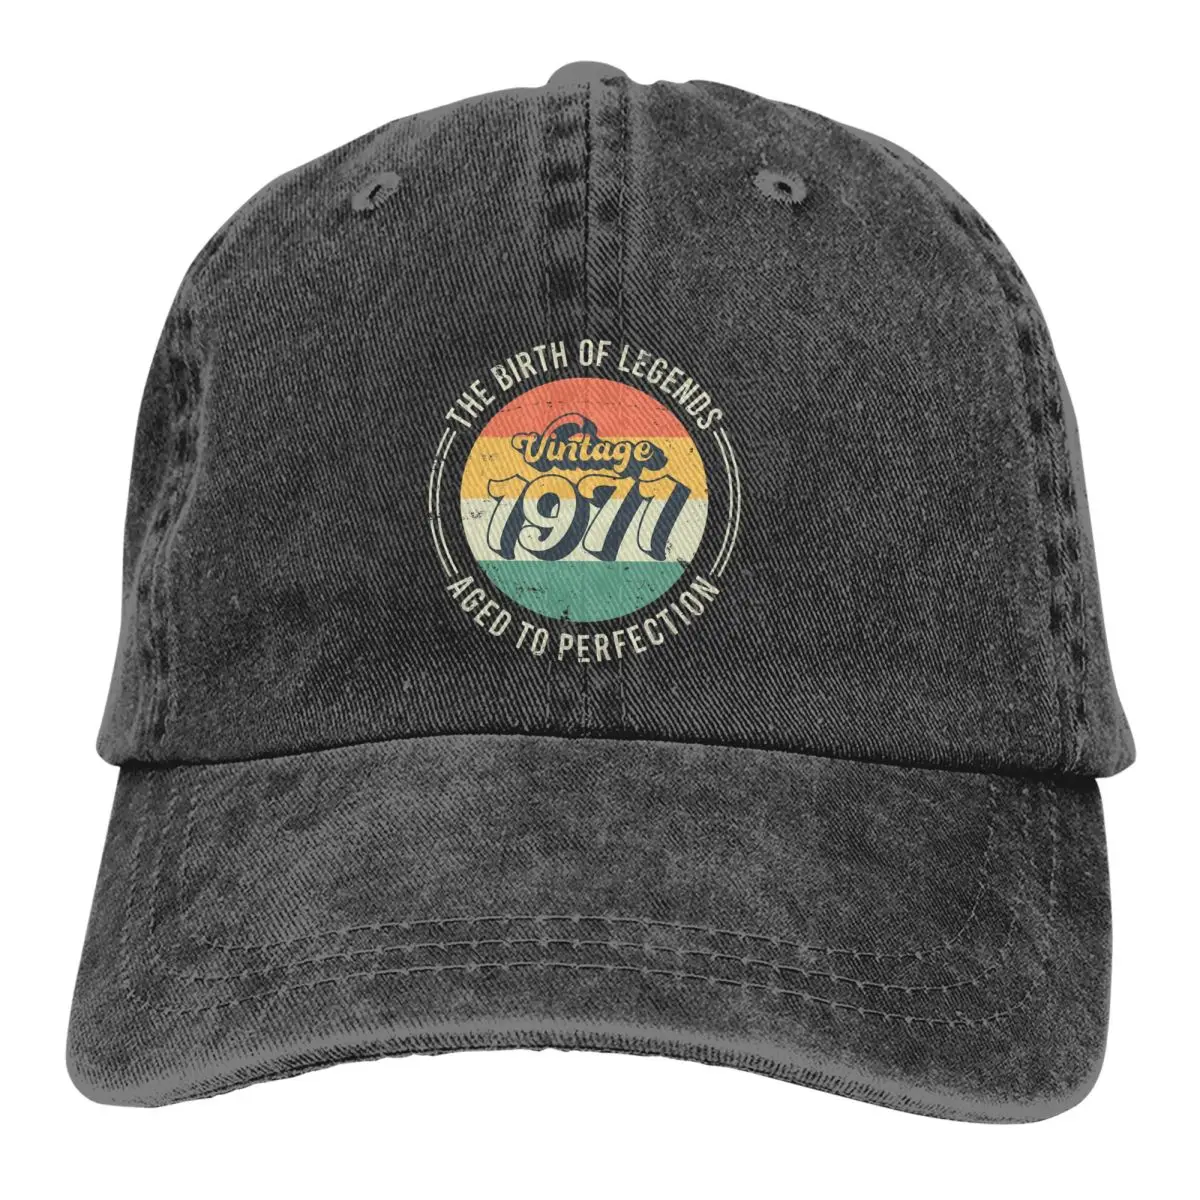 

Summer Cap Sun Visor Aged To Perfection Hip Hop Caps Vintage 1971 Culture Cowboy Hat Peaked Hats